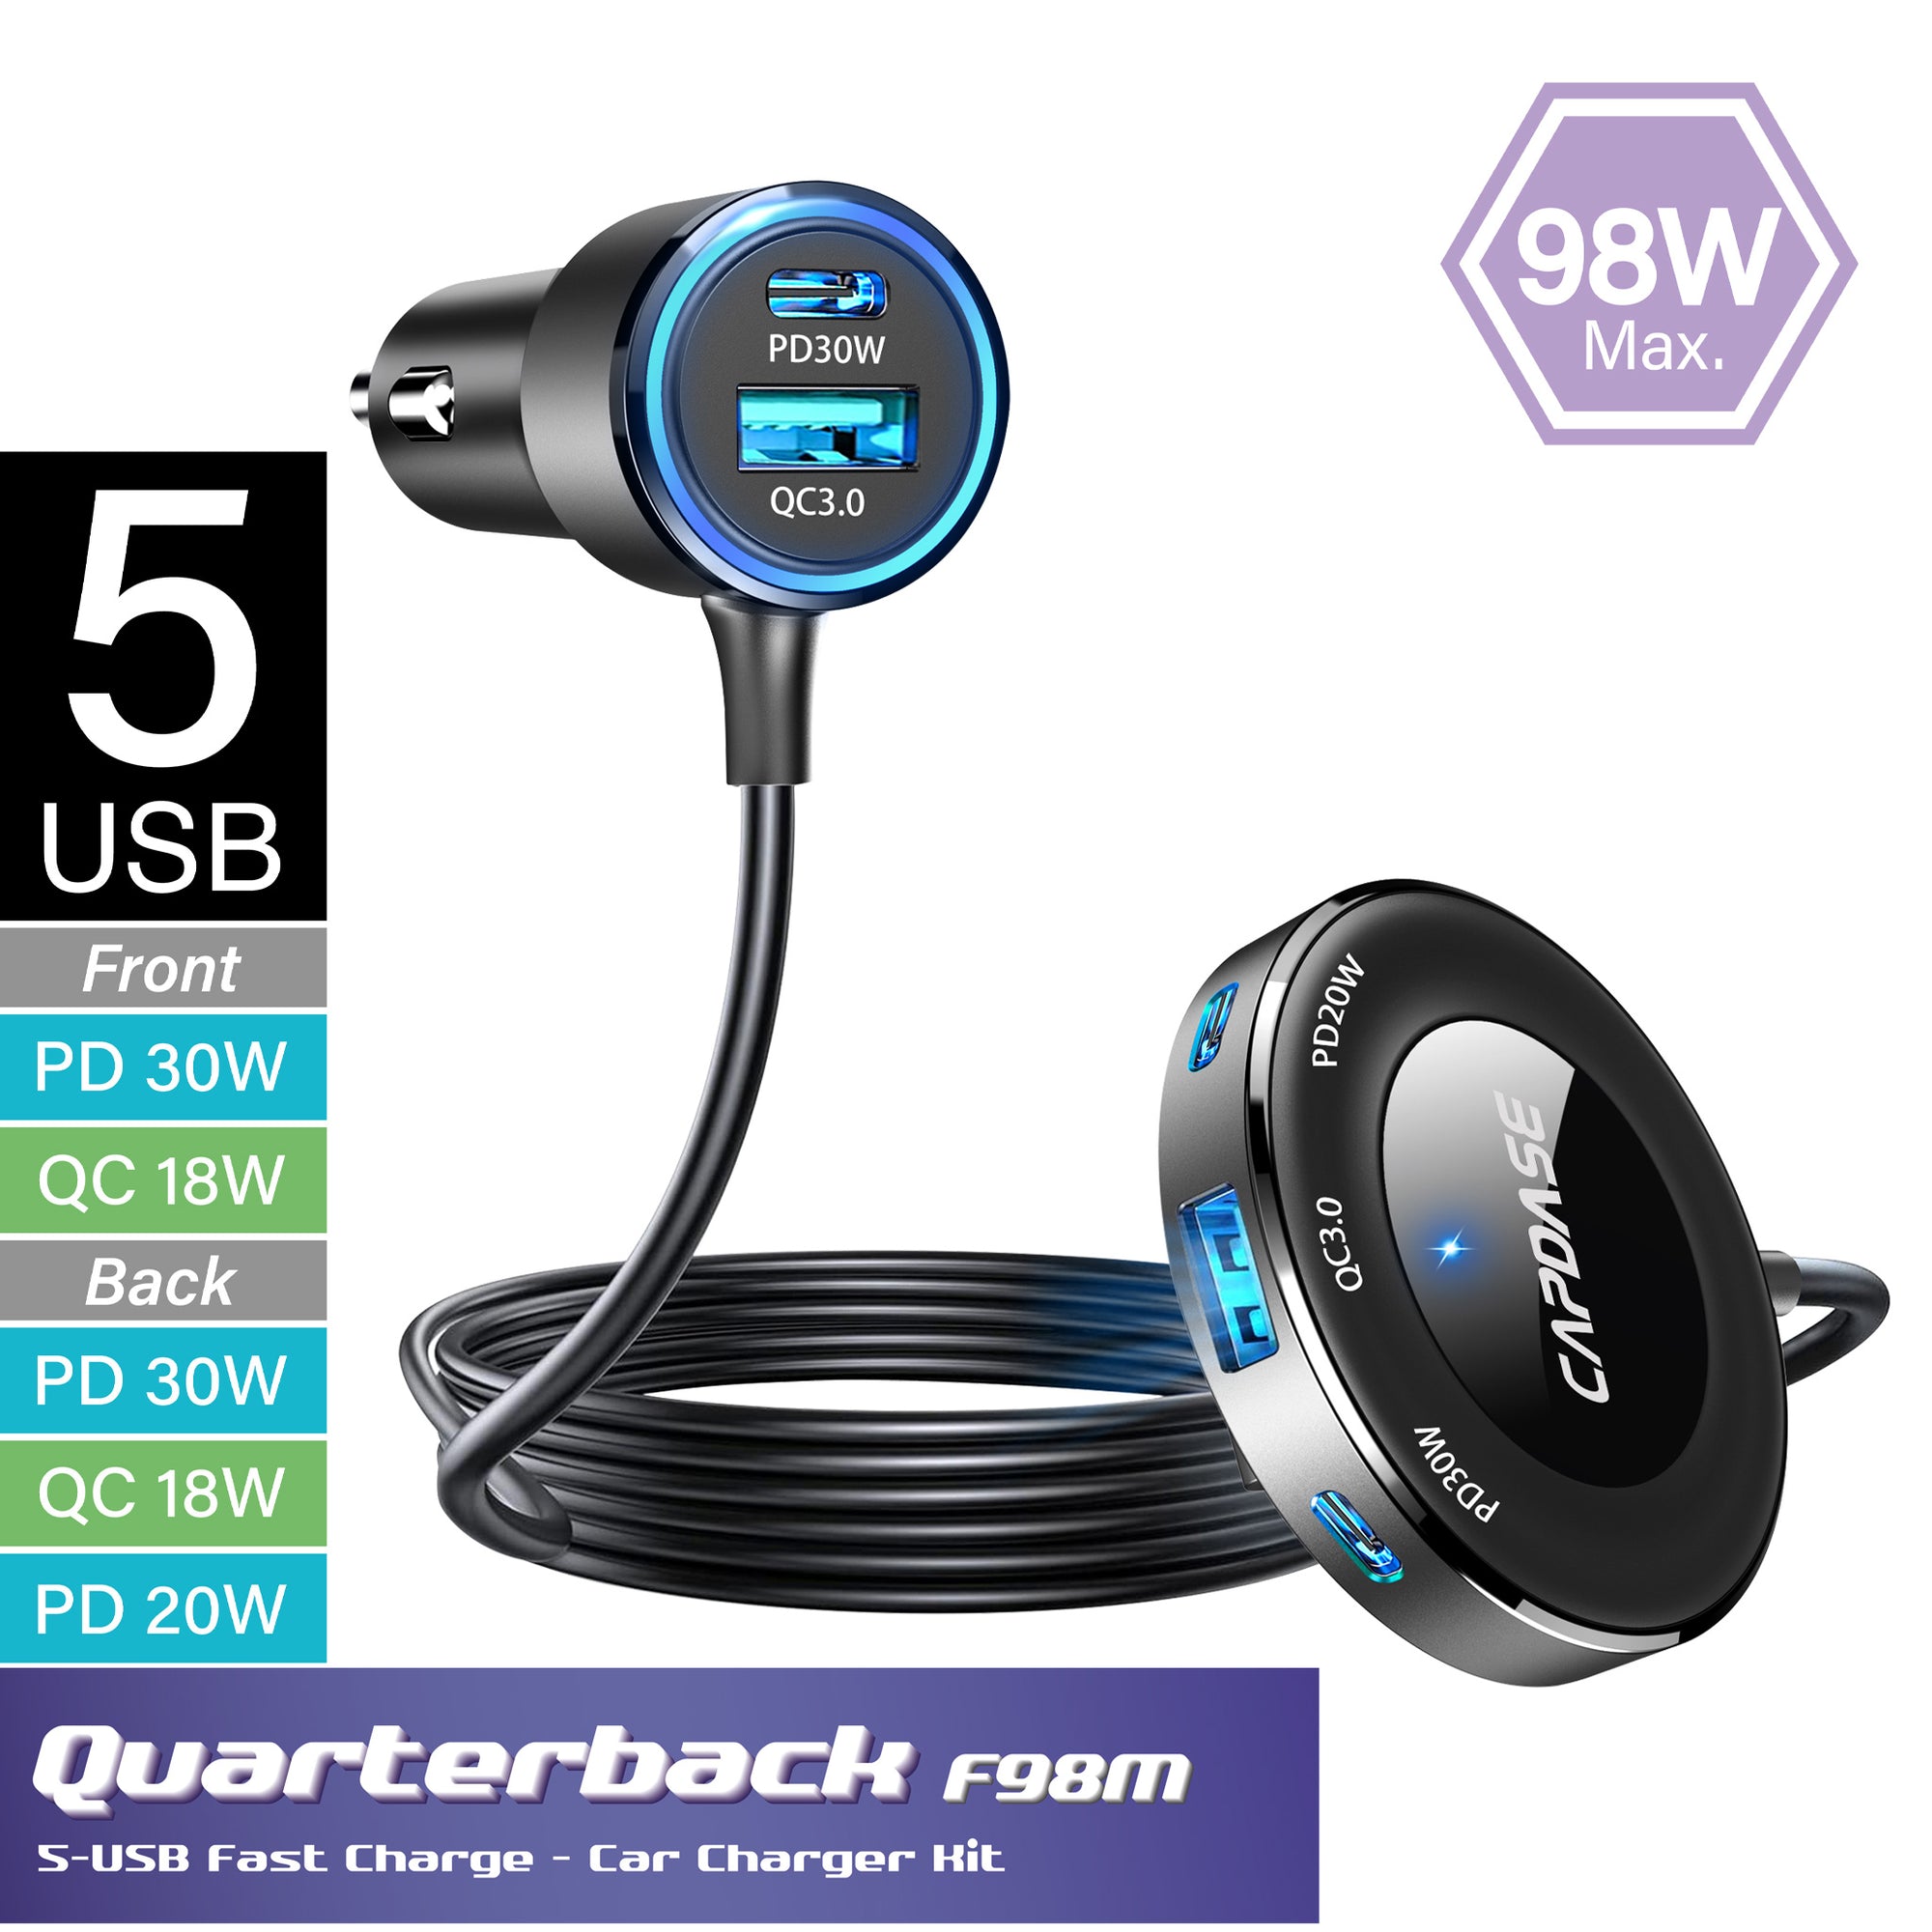 Quarterback F98M QC 3.0 / PD 3.0 Fast Charging 5-USB Car charger